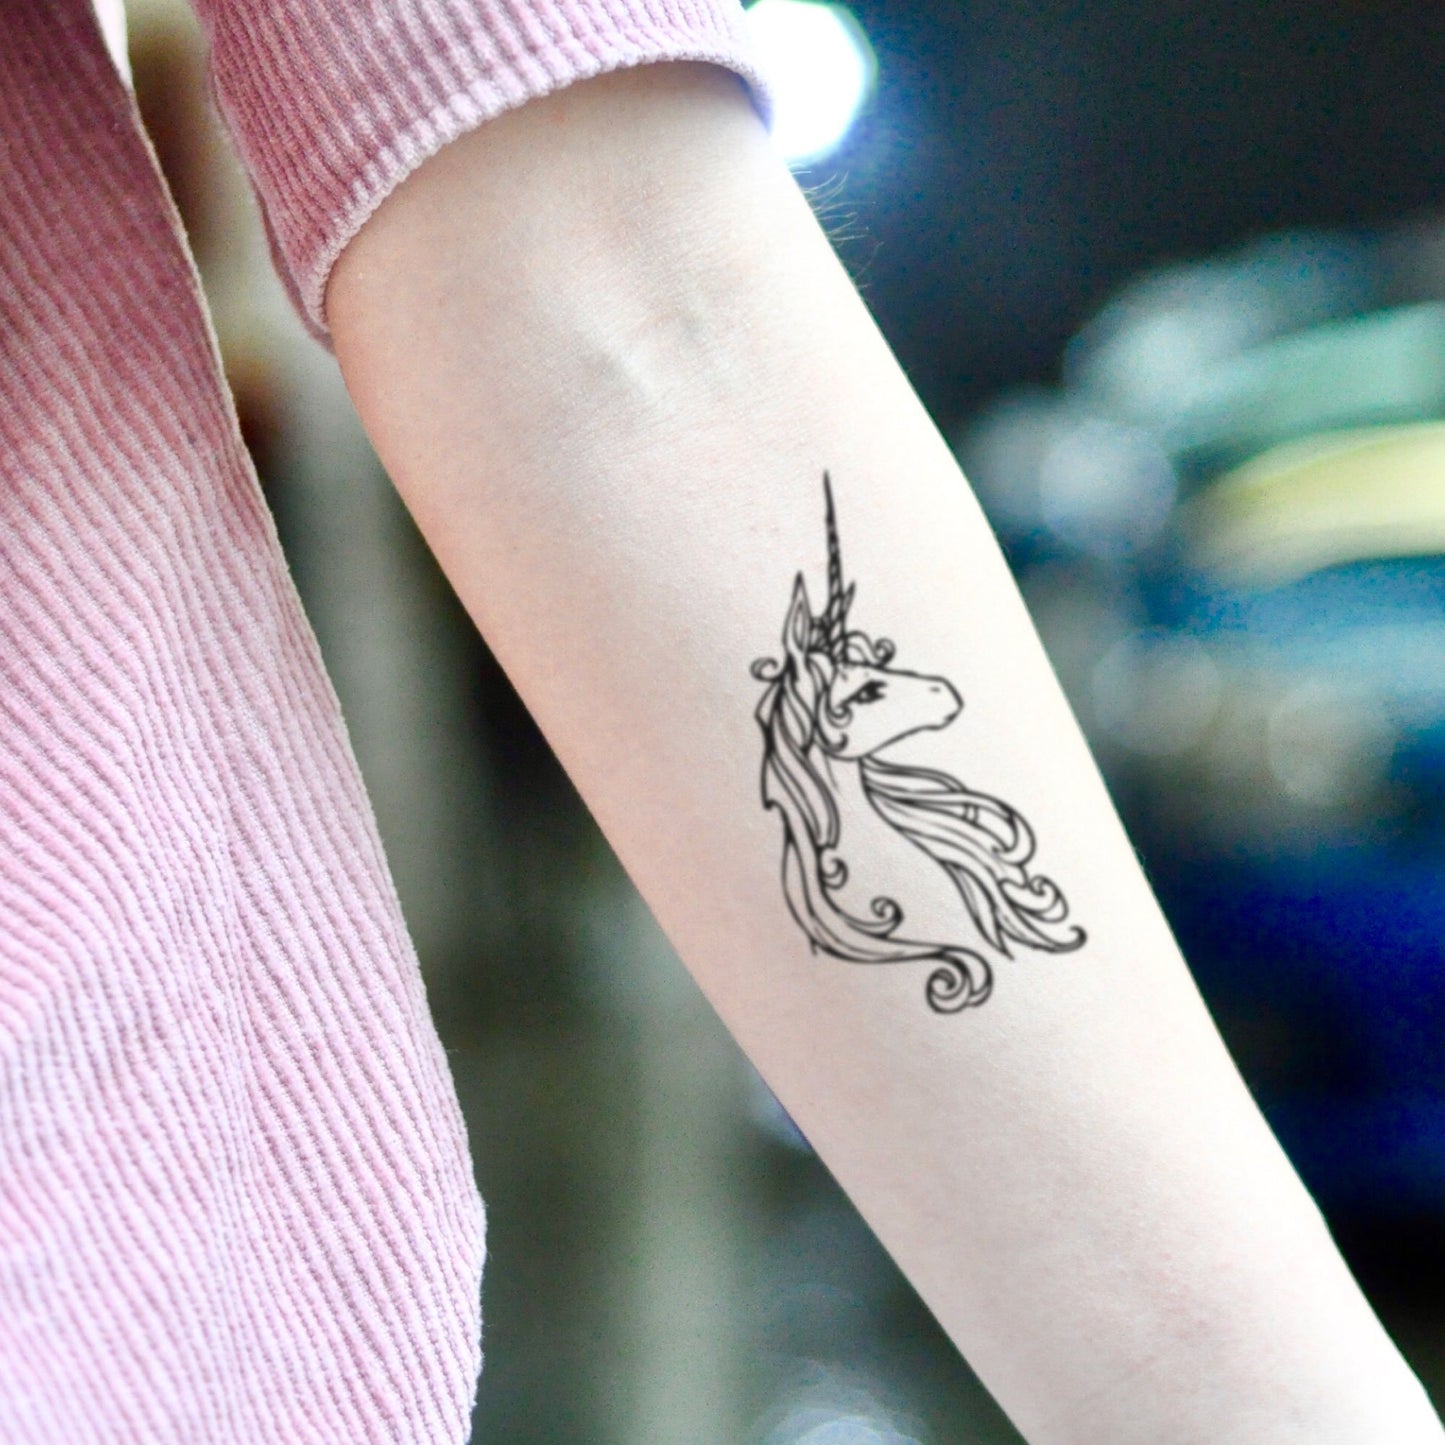 fake small the last unicorn illustrative temporary tattoo sticker design idea on inner arm